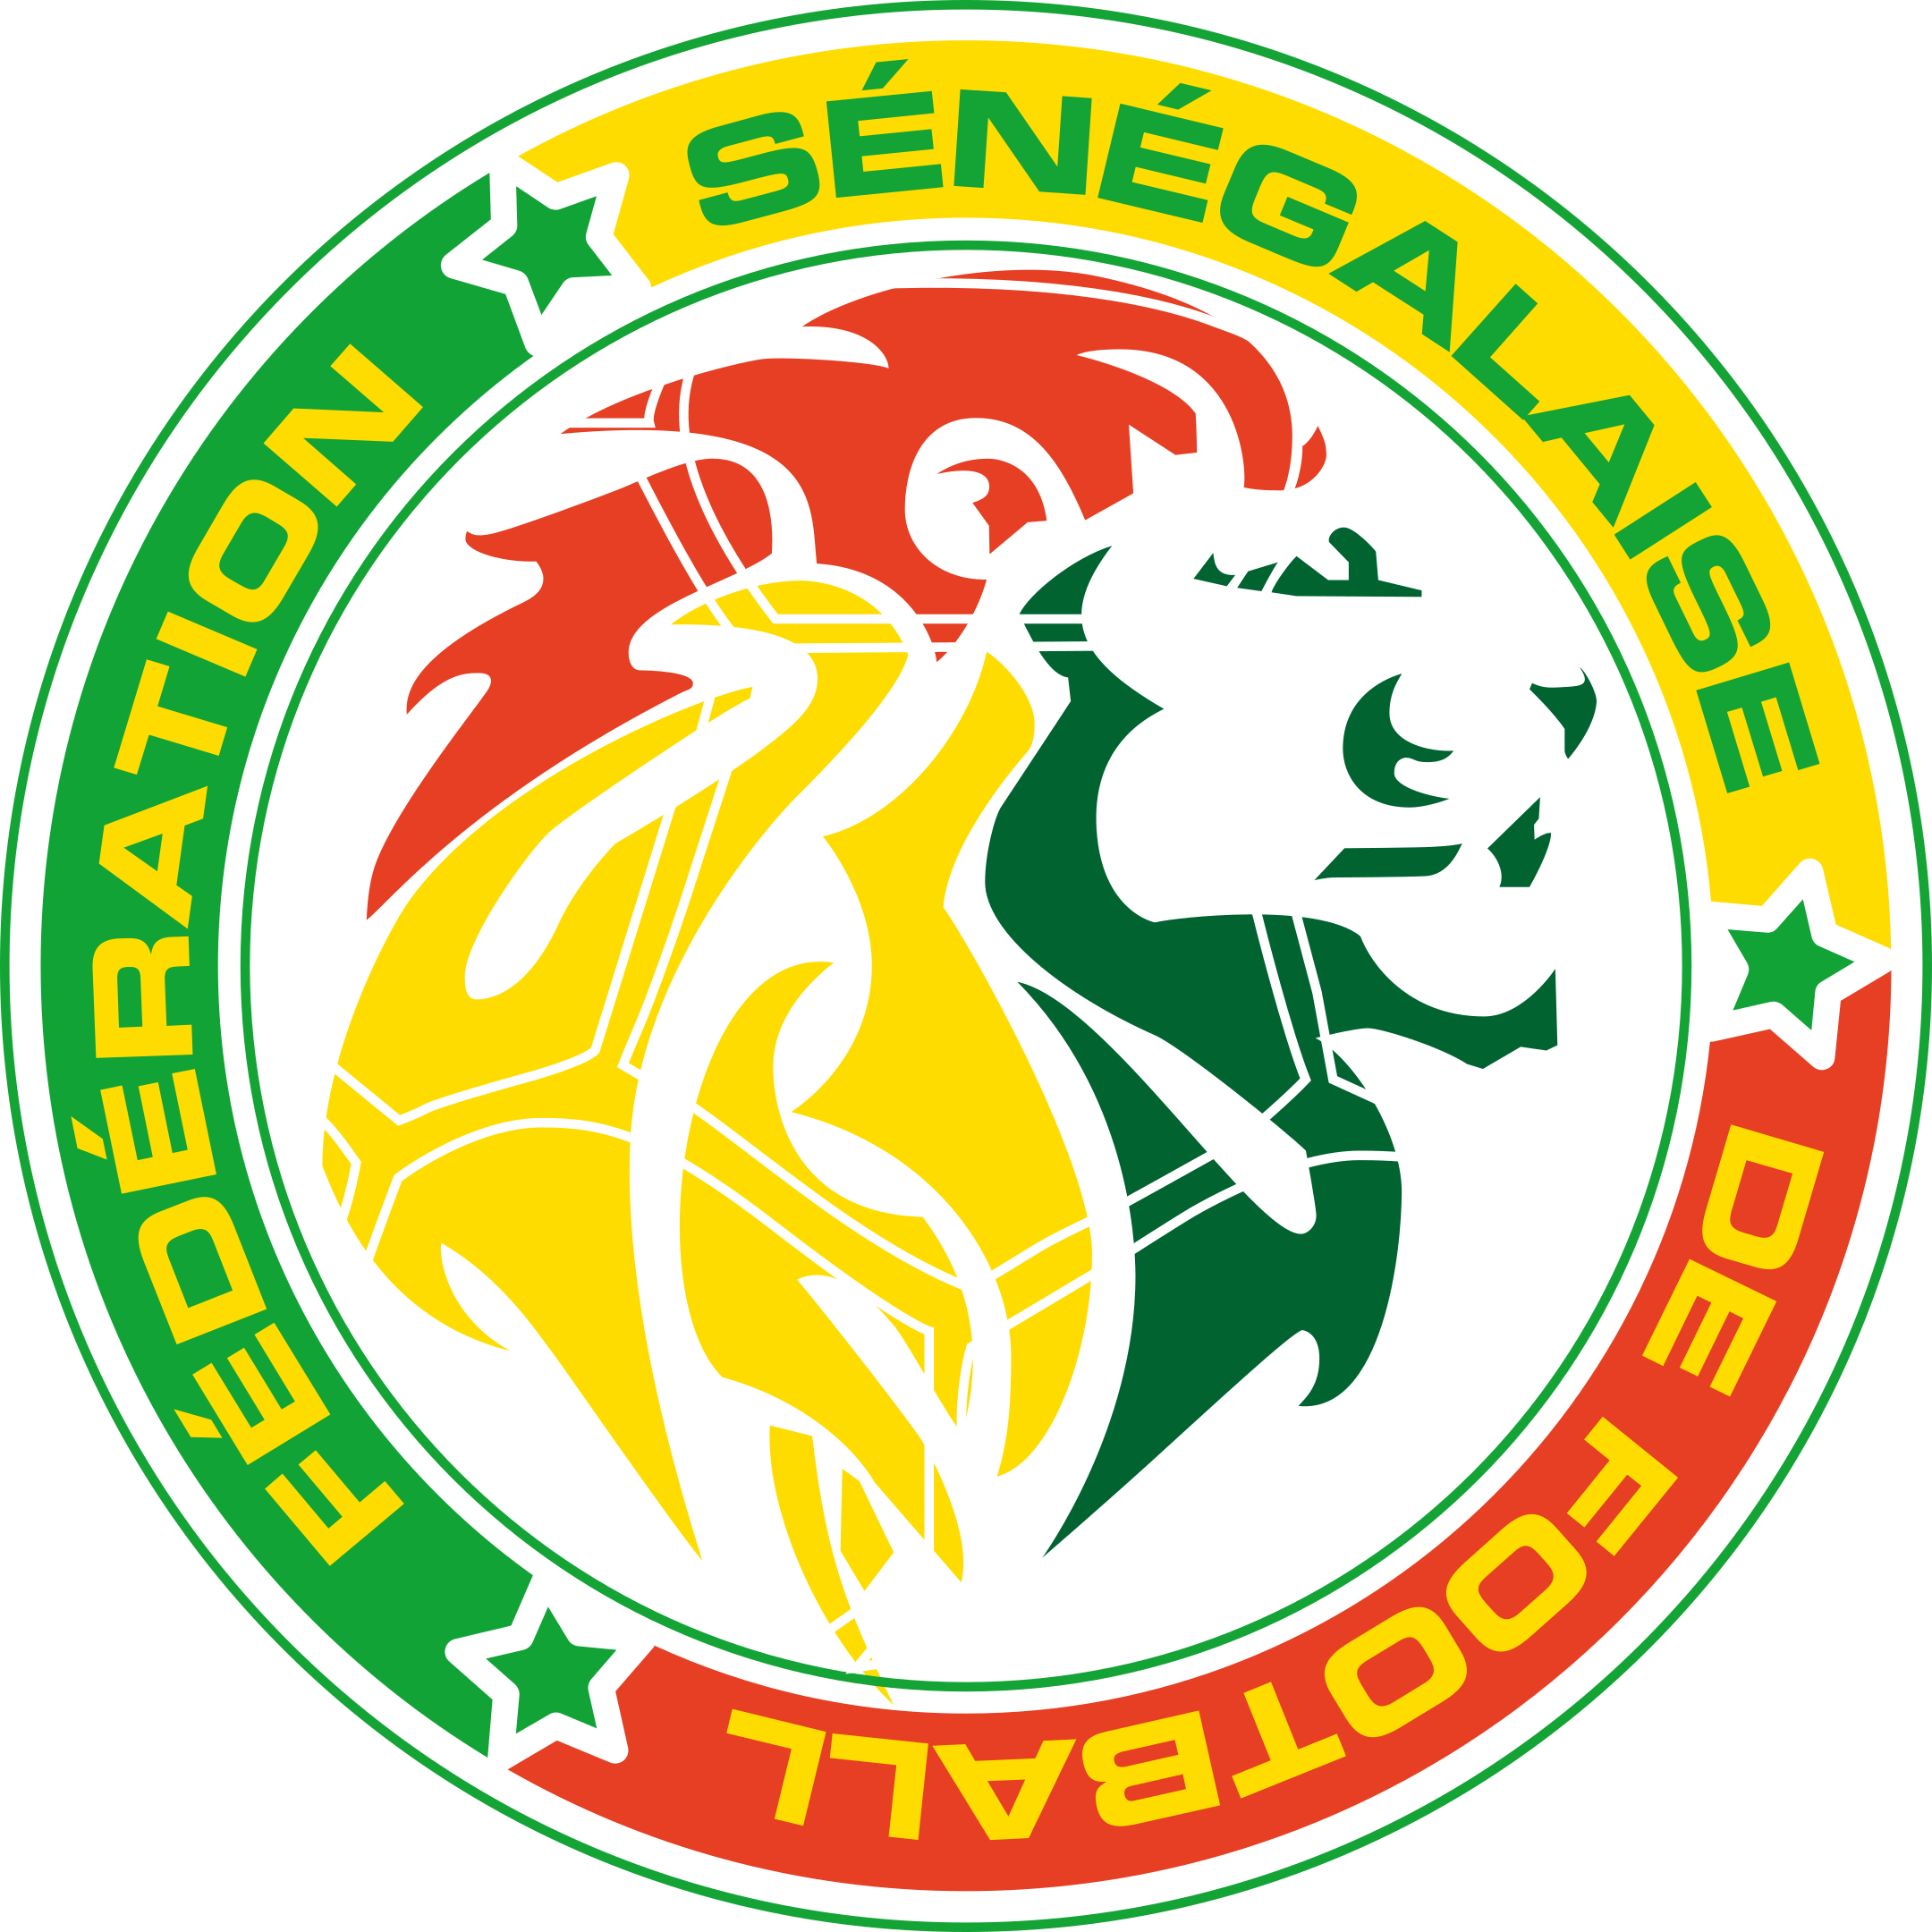 fsf senegal national football team logo 1 - FSF Logo - Senegal National Football Team Logo